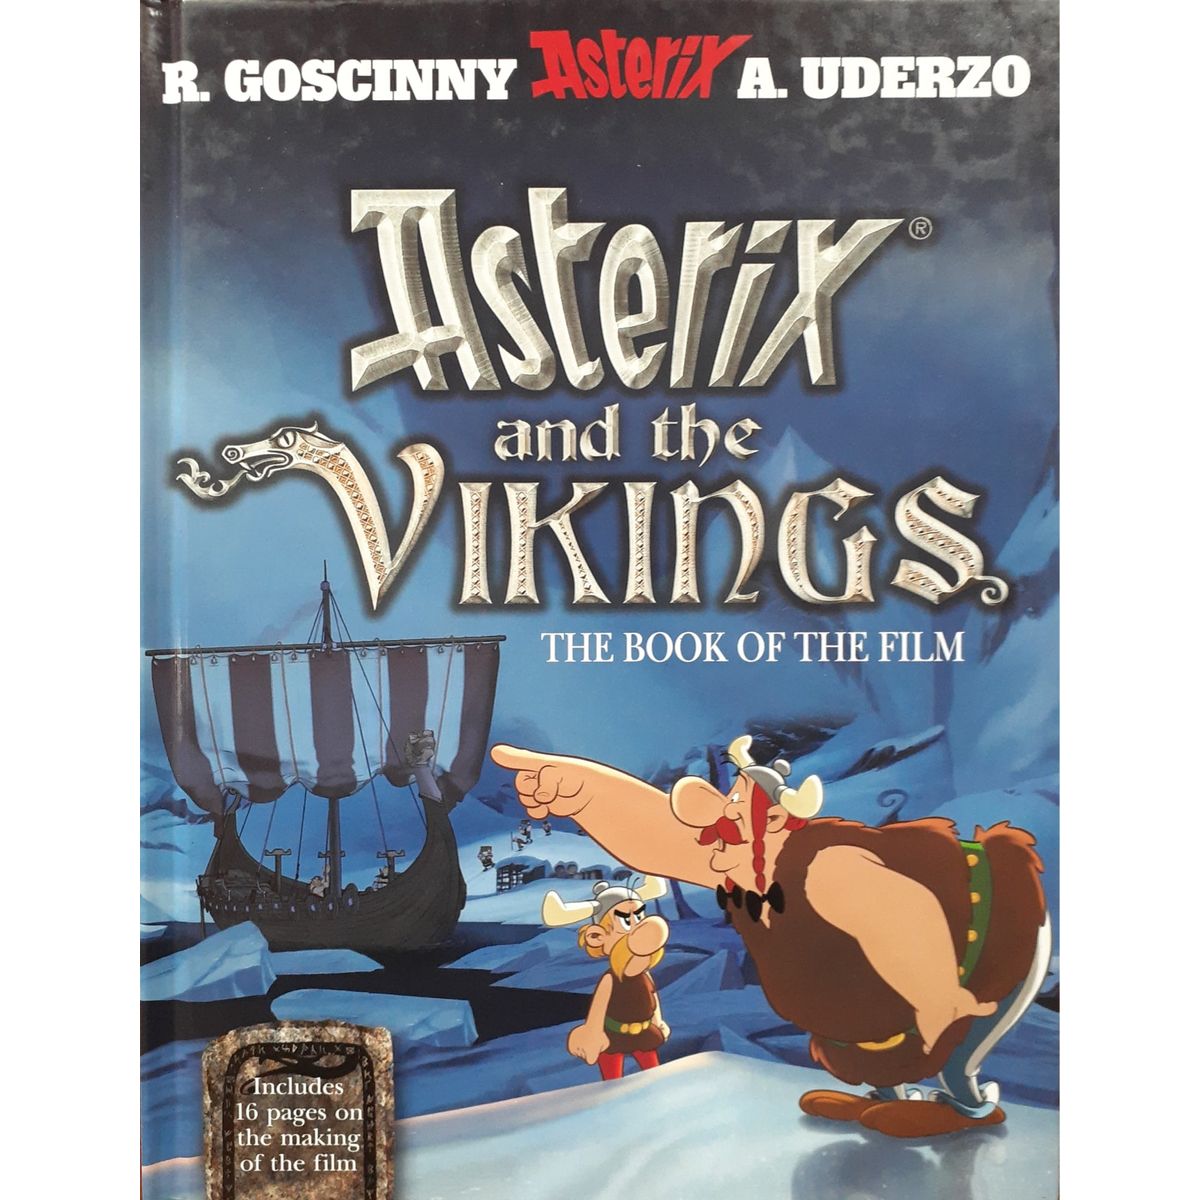 ISBN: 9780752885902 / 0752885901 - Asterix and the Vikings by René Goscinny & Albert Uderzo [2006]